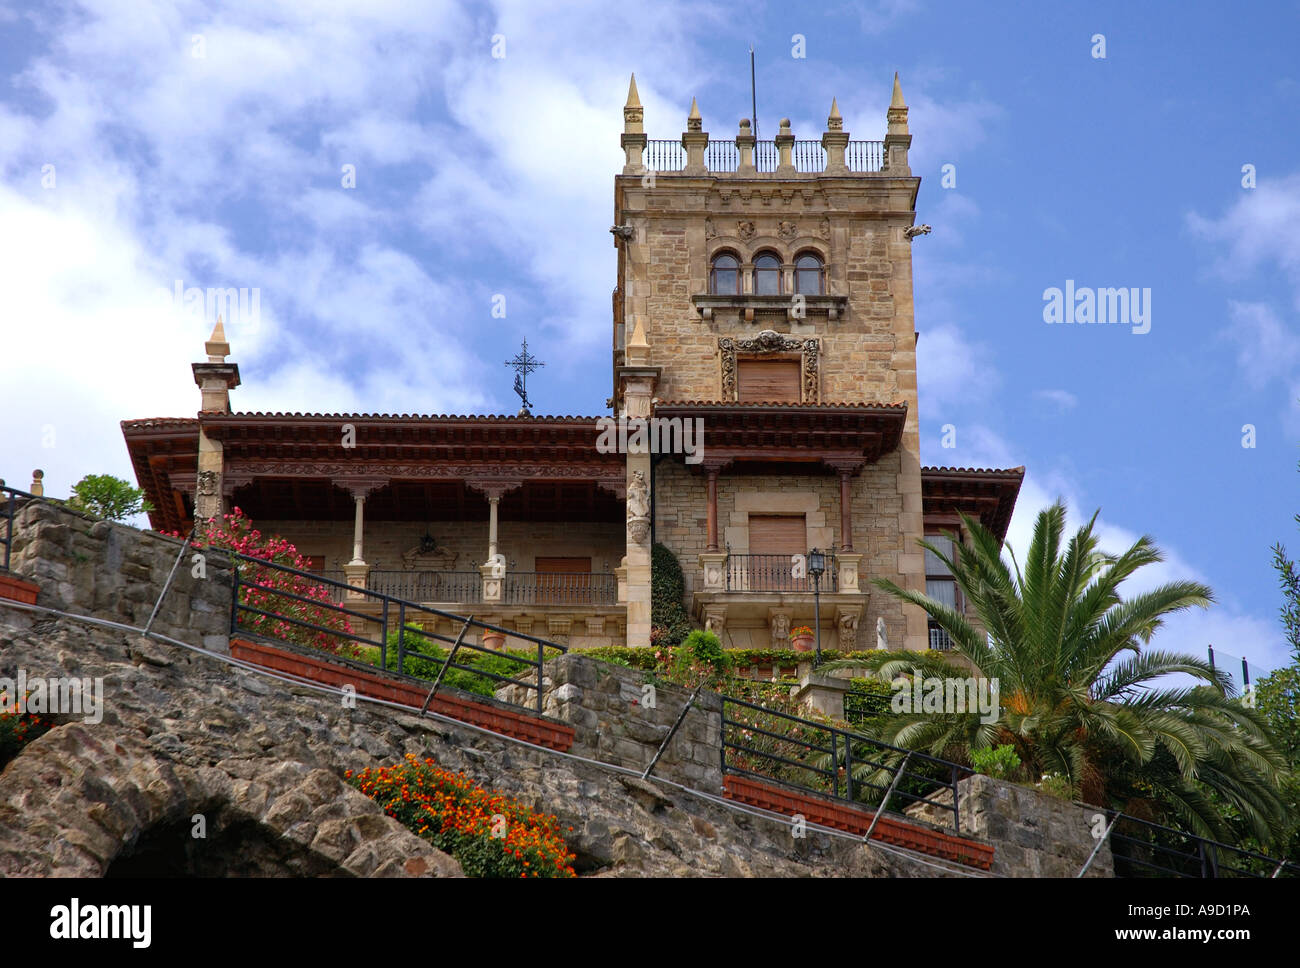 Charakteristische Gebäude Santander Kantabrien Biskaya Golfo de Vizcaya Spanien España Iberia Europas Stockfoto